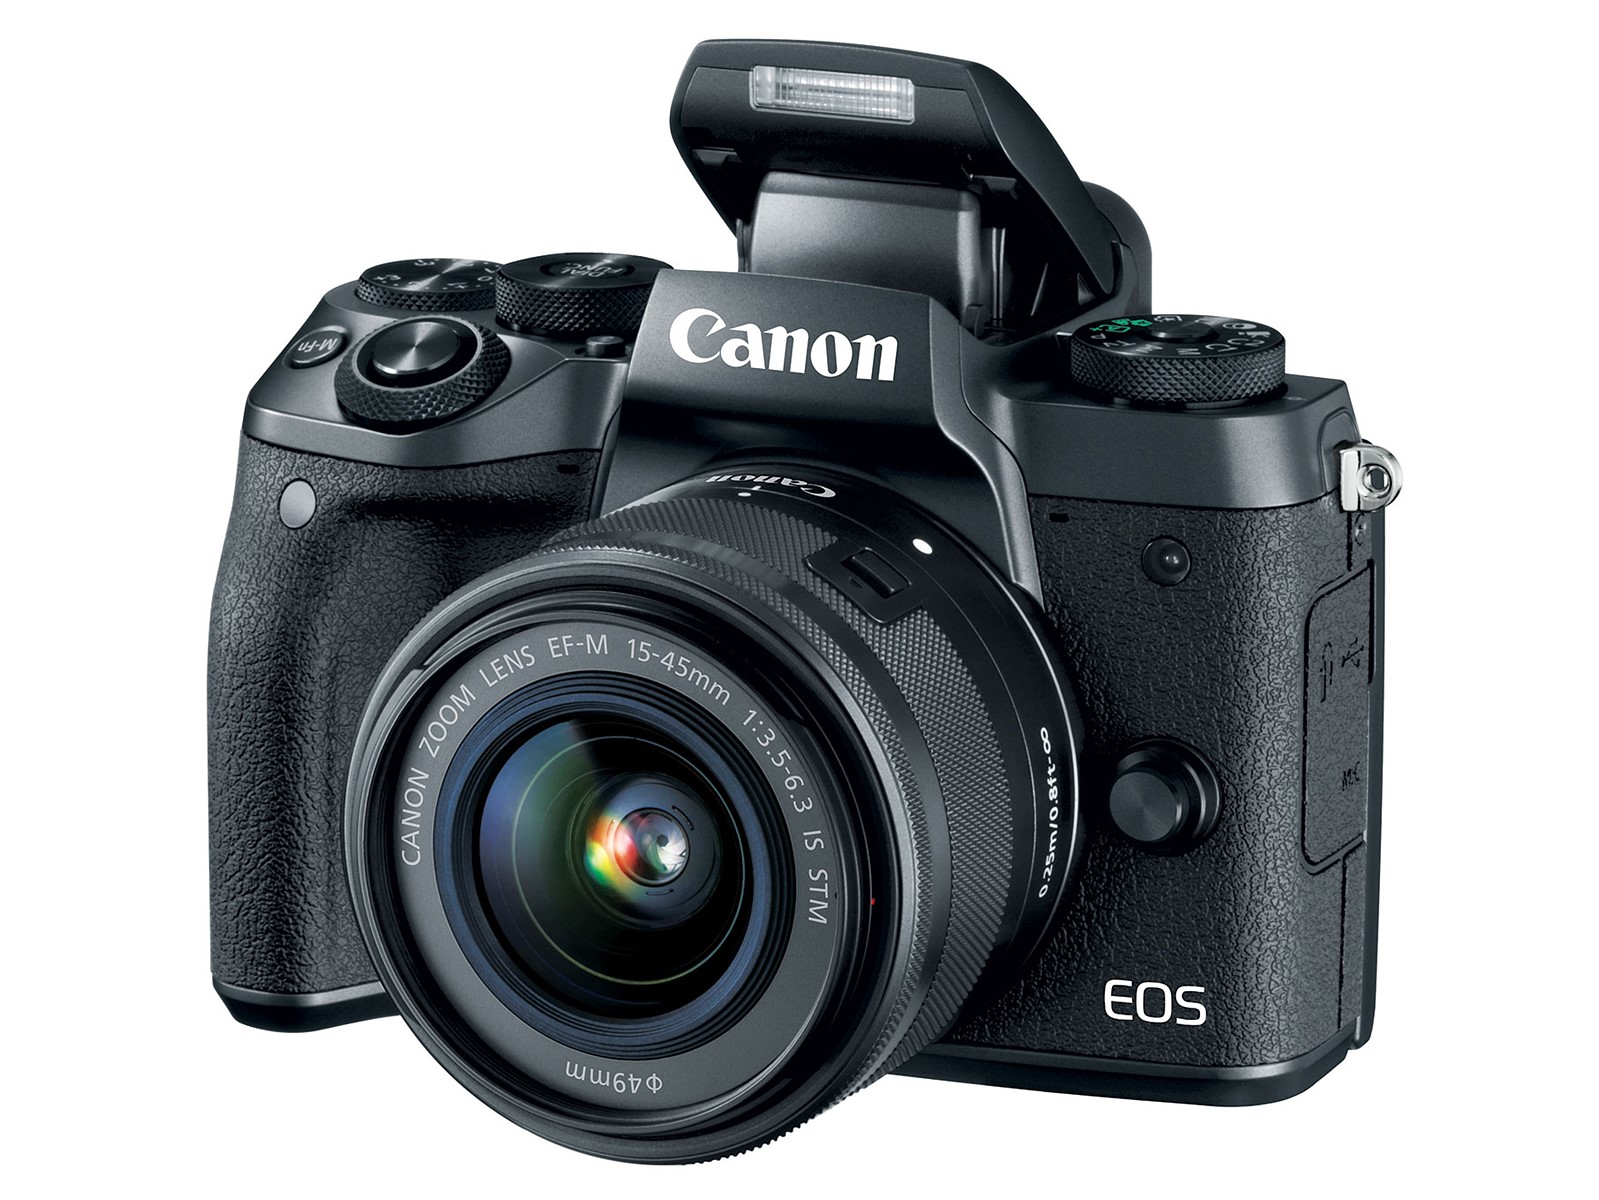  Canon G7X Mark III, Canon EOS M5 Mark II and Canon SX740 Coming Soon